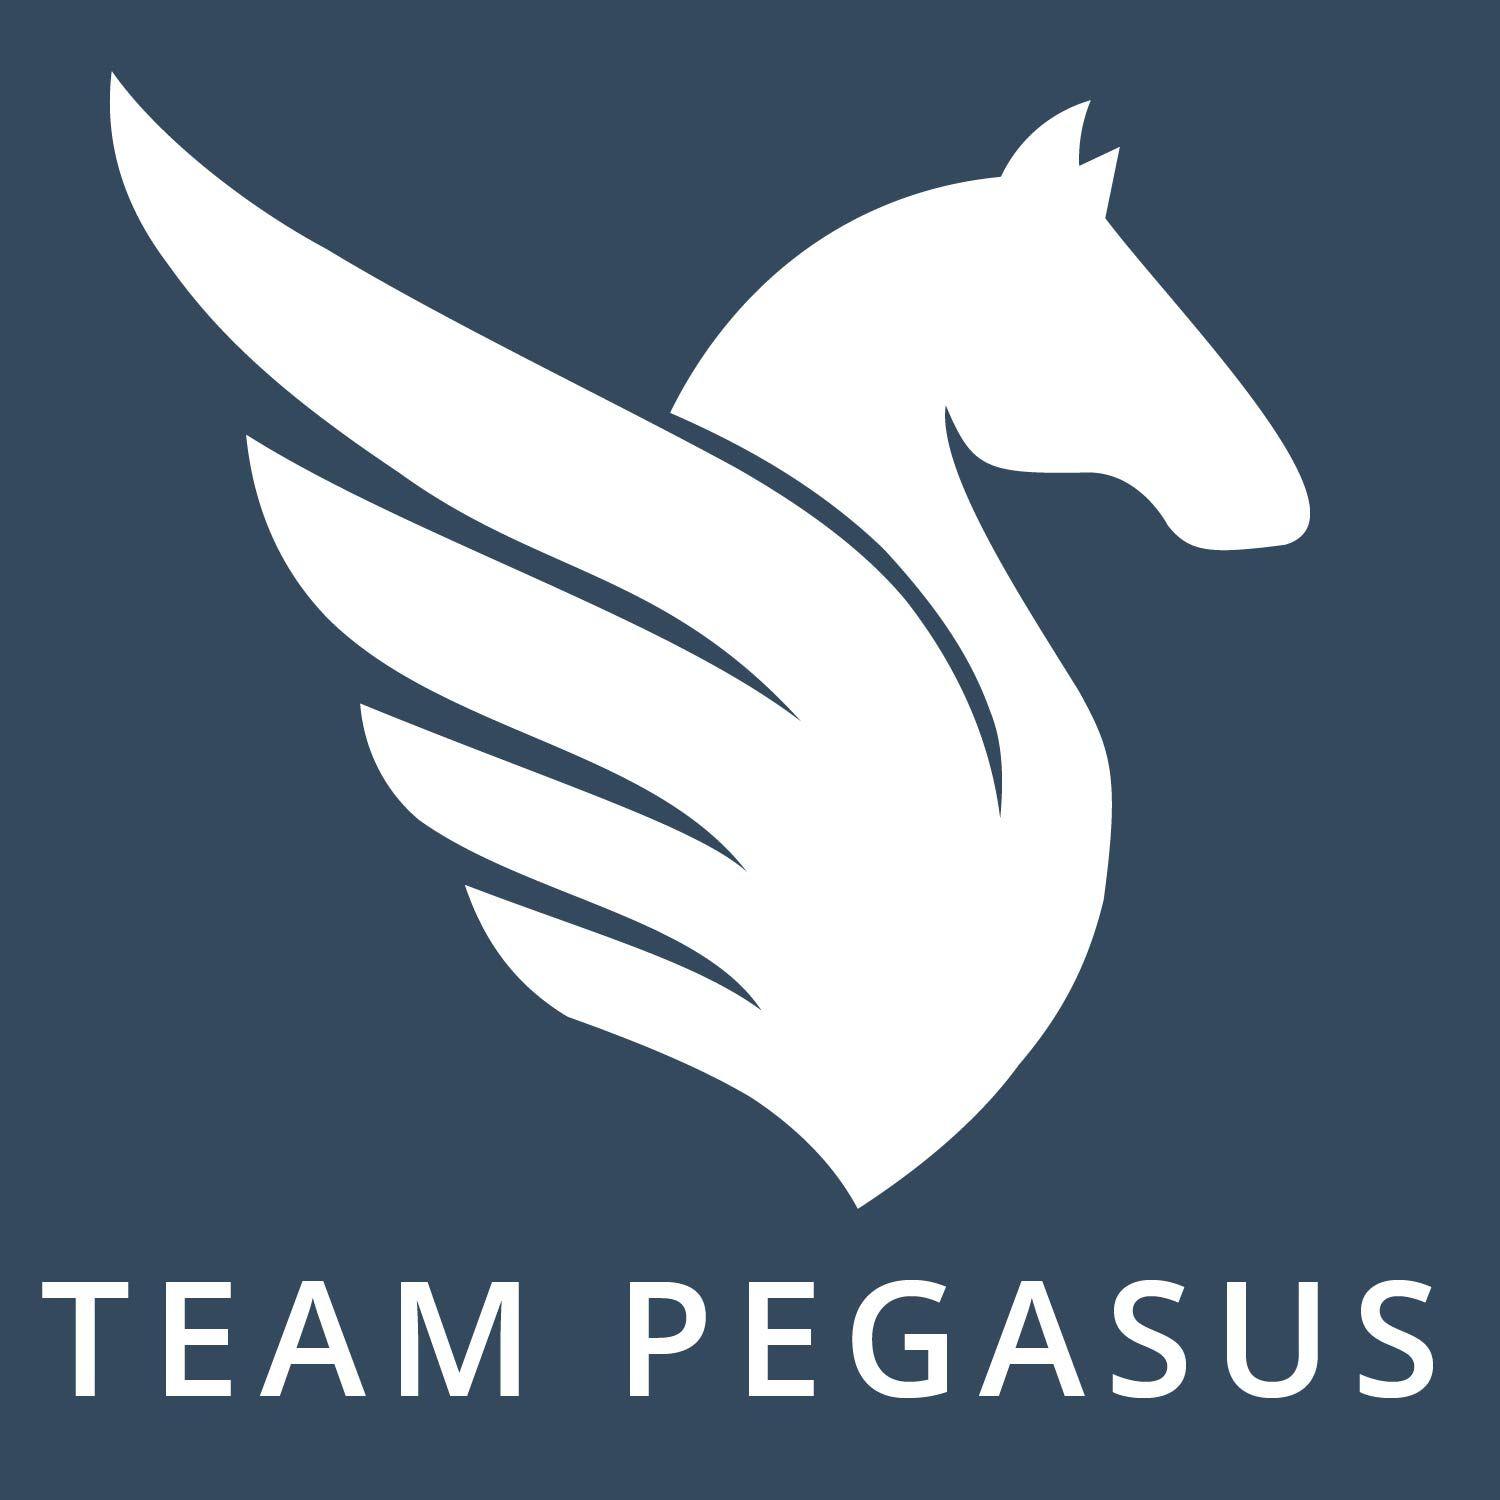 Pegasus Teams Logo - New Student Design Competition 2017: Pegasus Mars Rover - Discussion ...